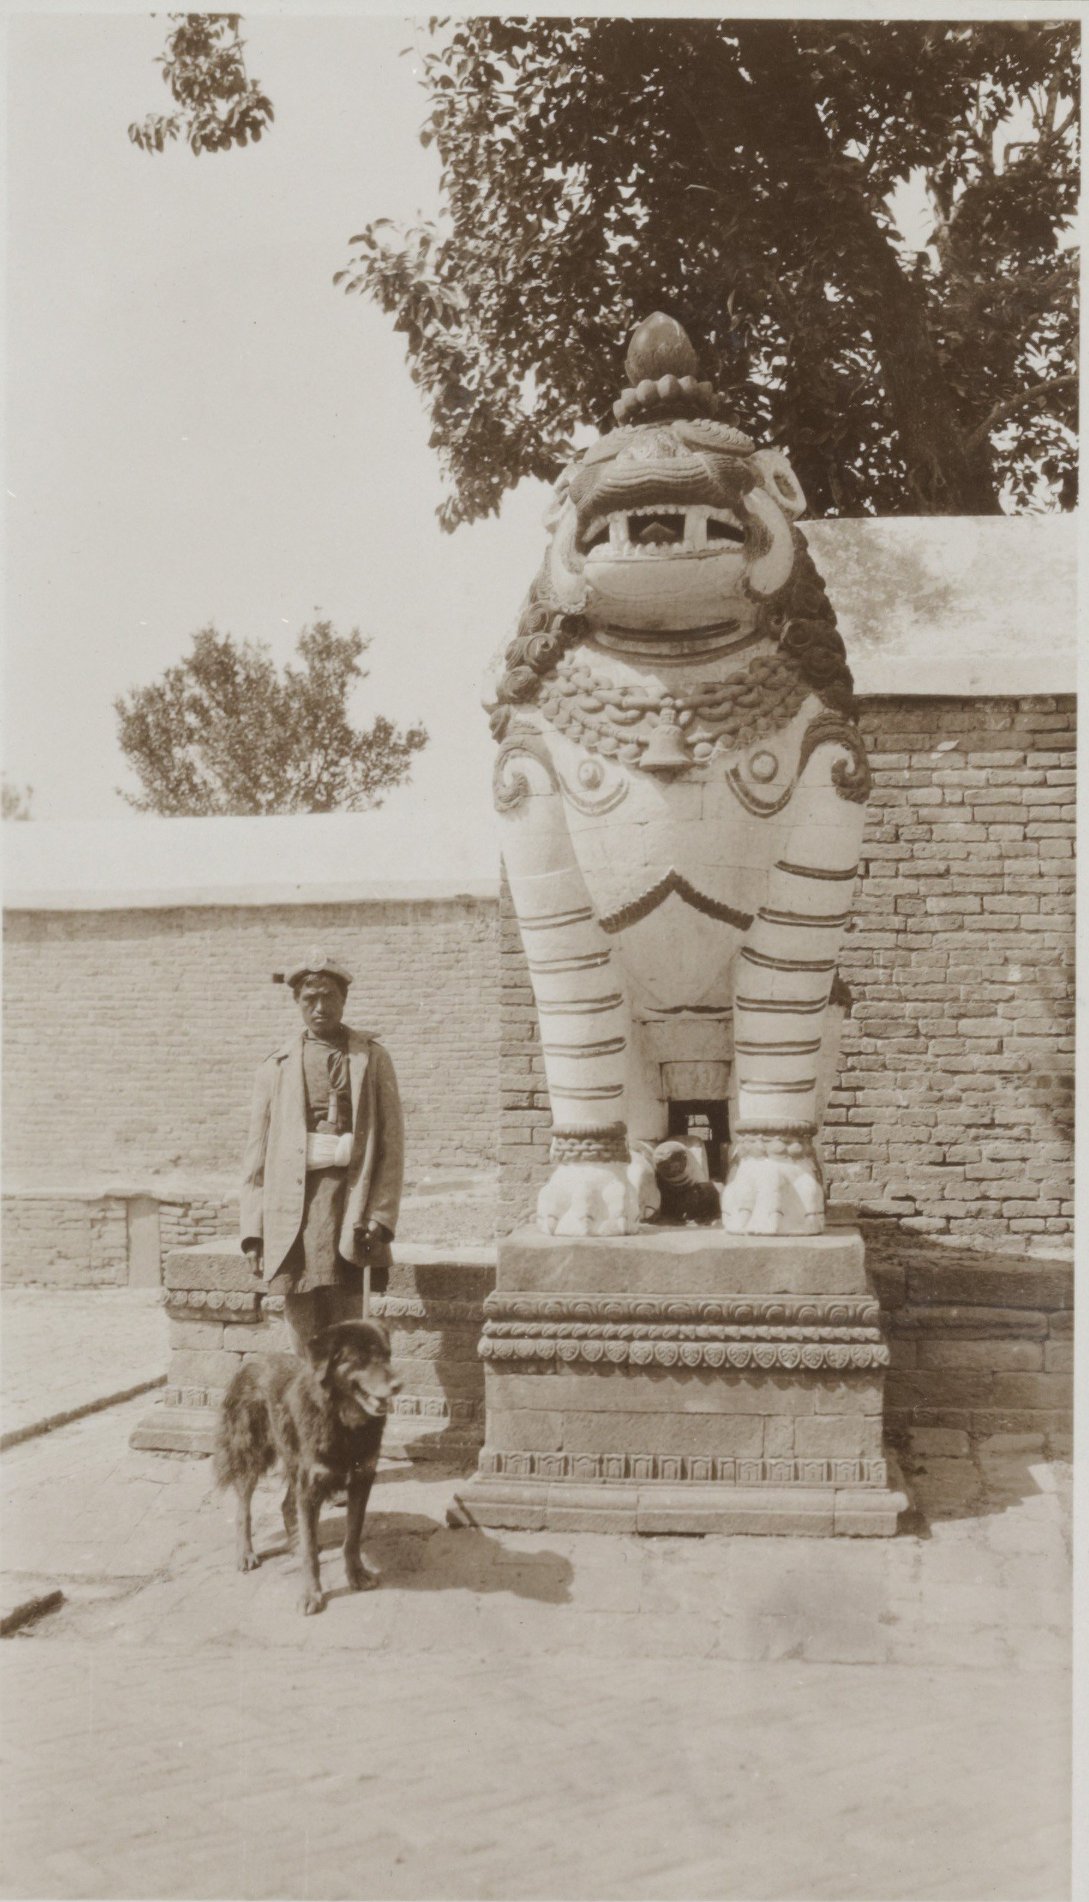 Padma School gate lion 1932-34 image